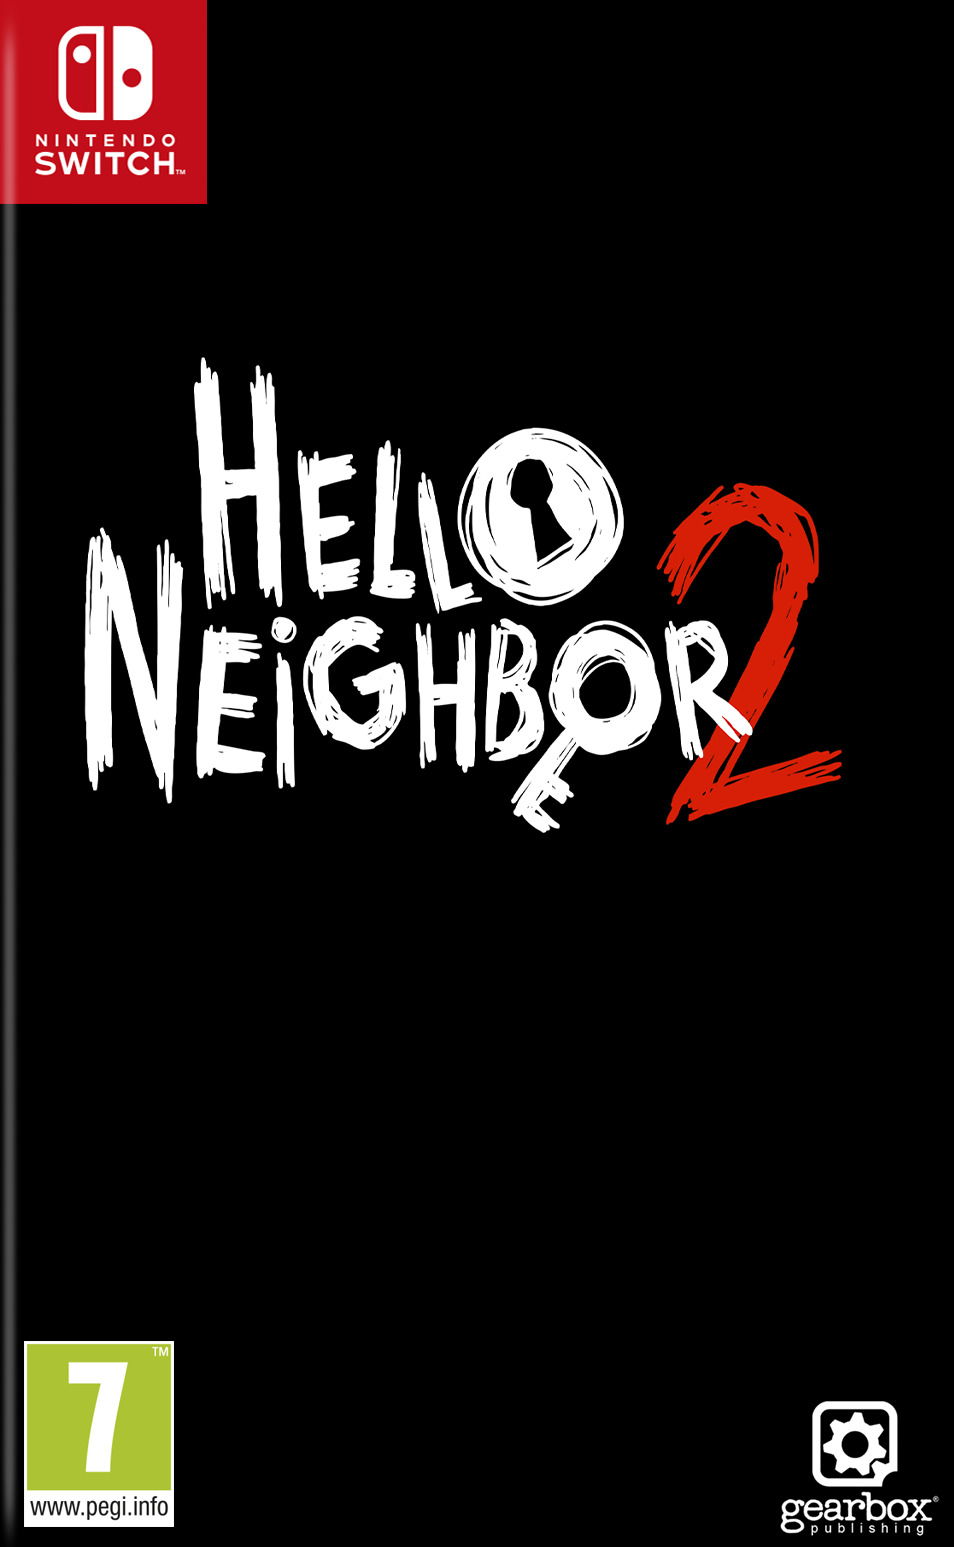 Switch hra Hello Neighbor 2